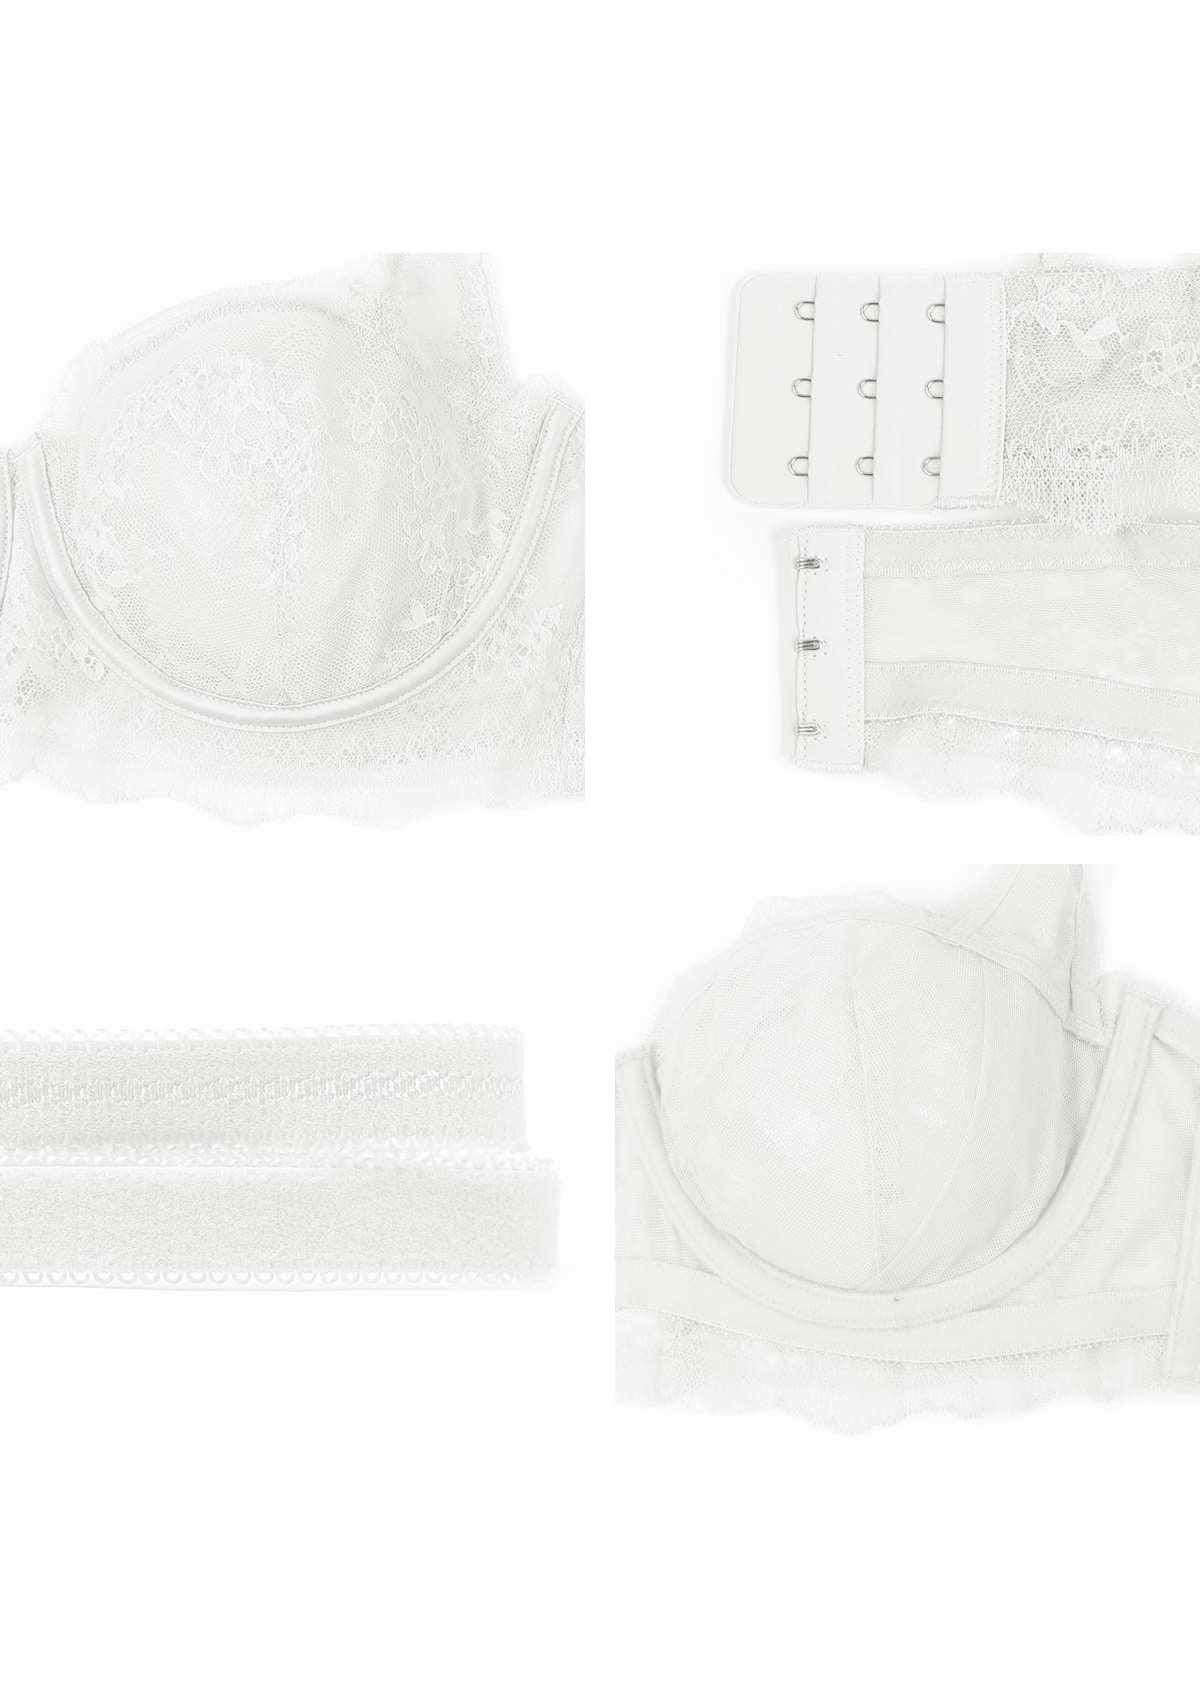 HSIA I Do Floral Lace Bridal Balconette Beautiful Bra For Special Day - White / 40 / DD/E